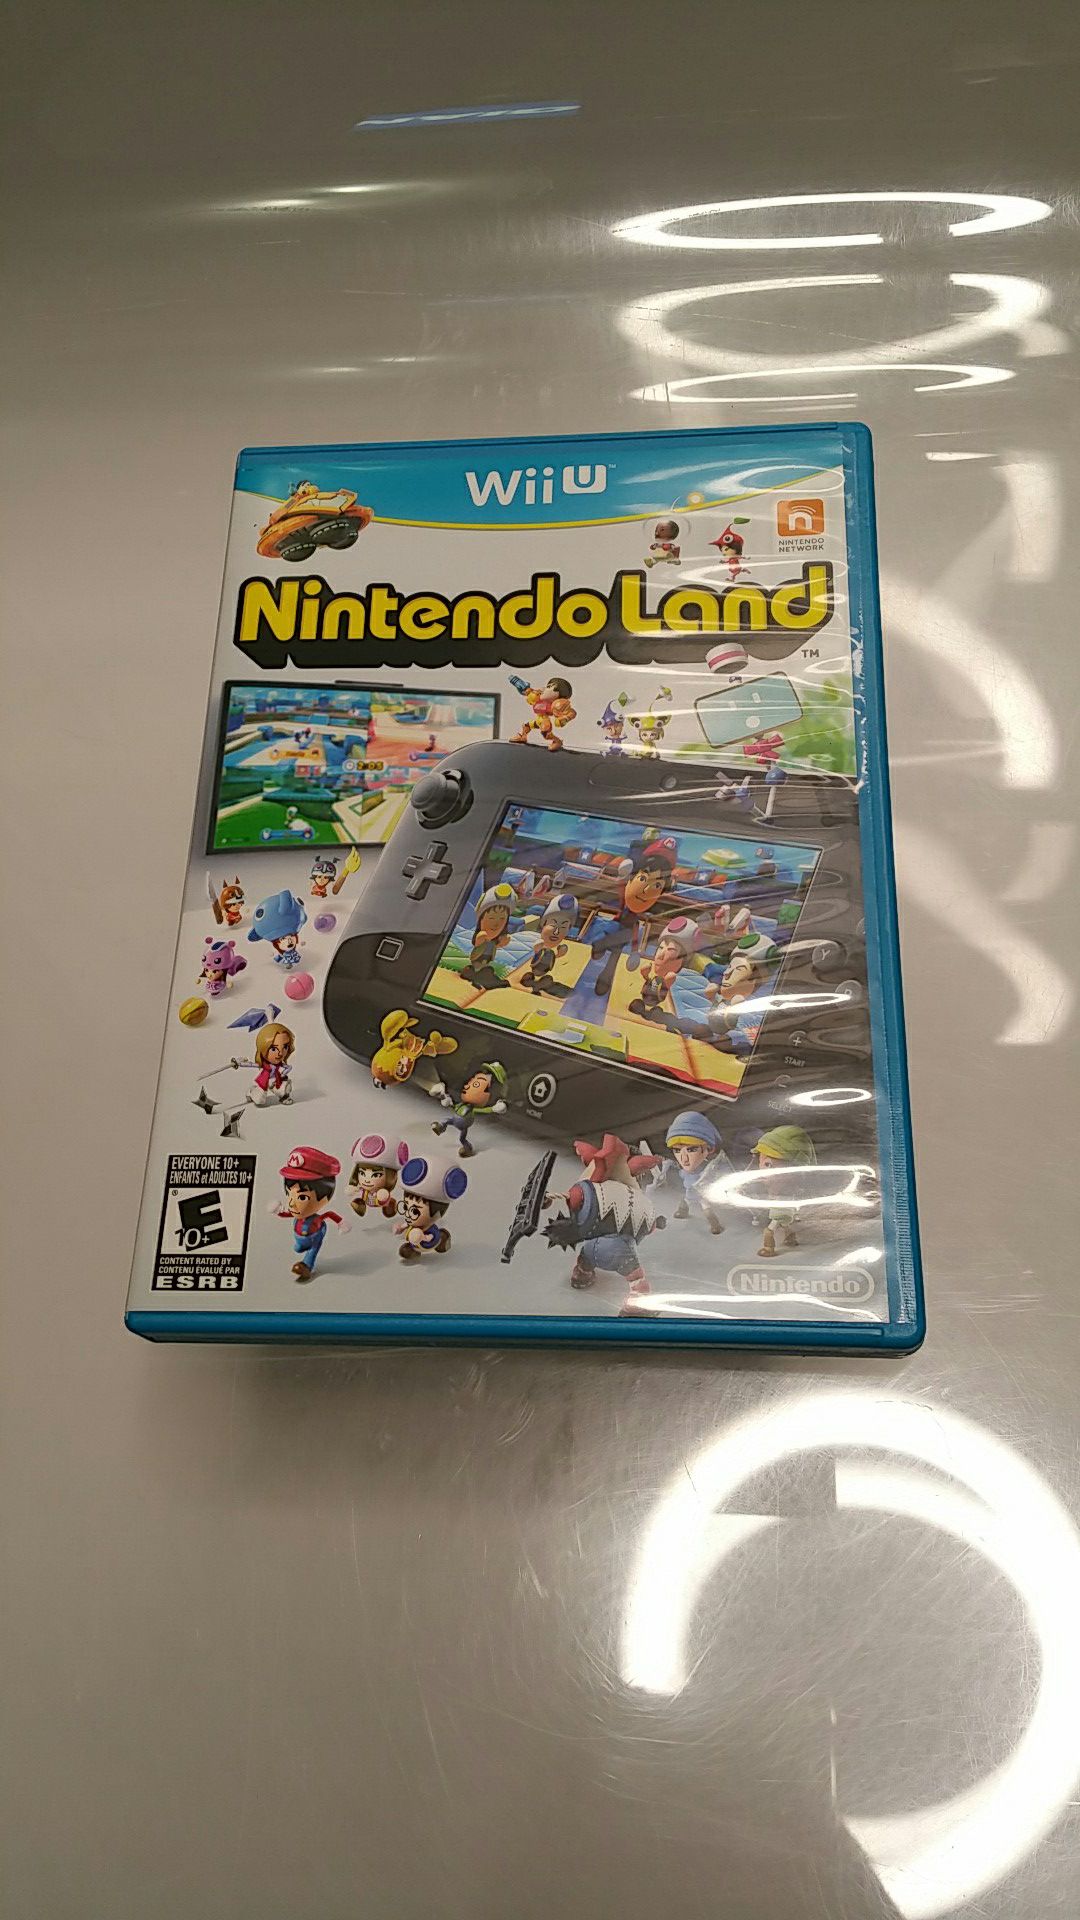 Nintendo Wii U NintendoLand Game